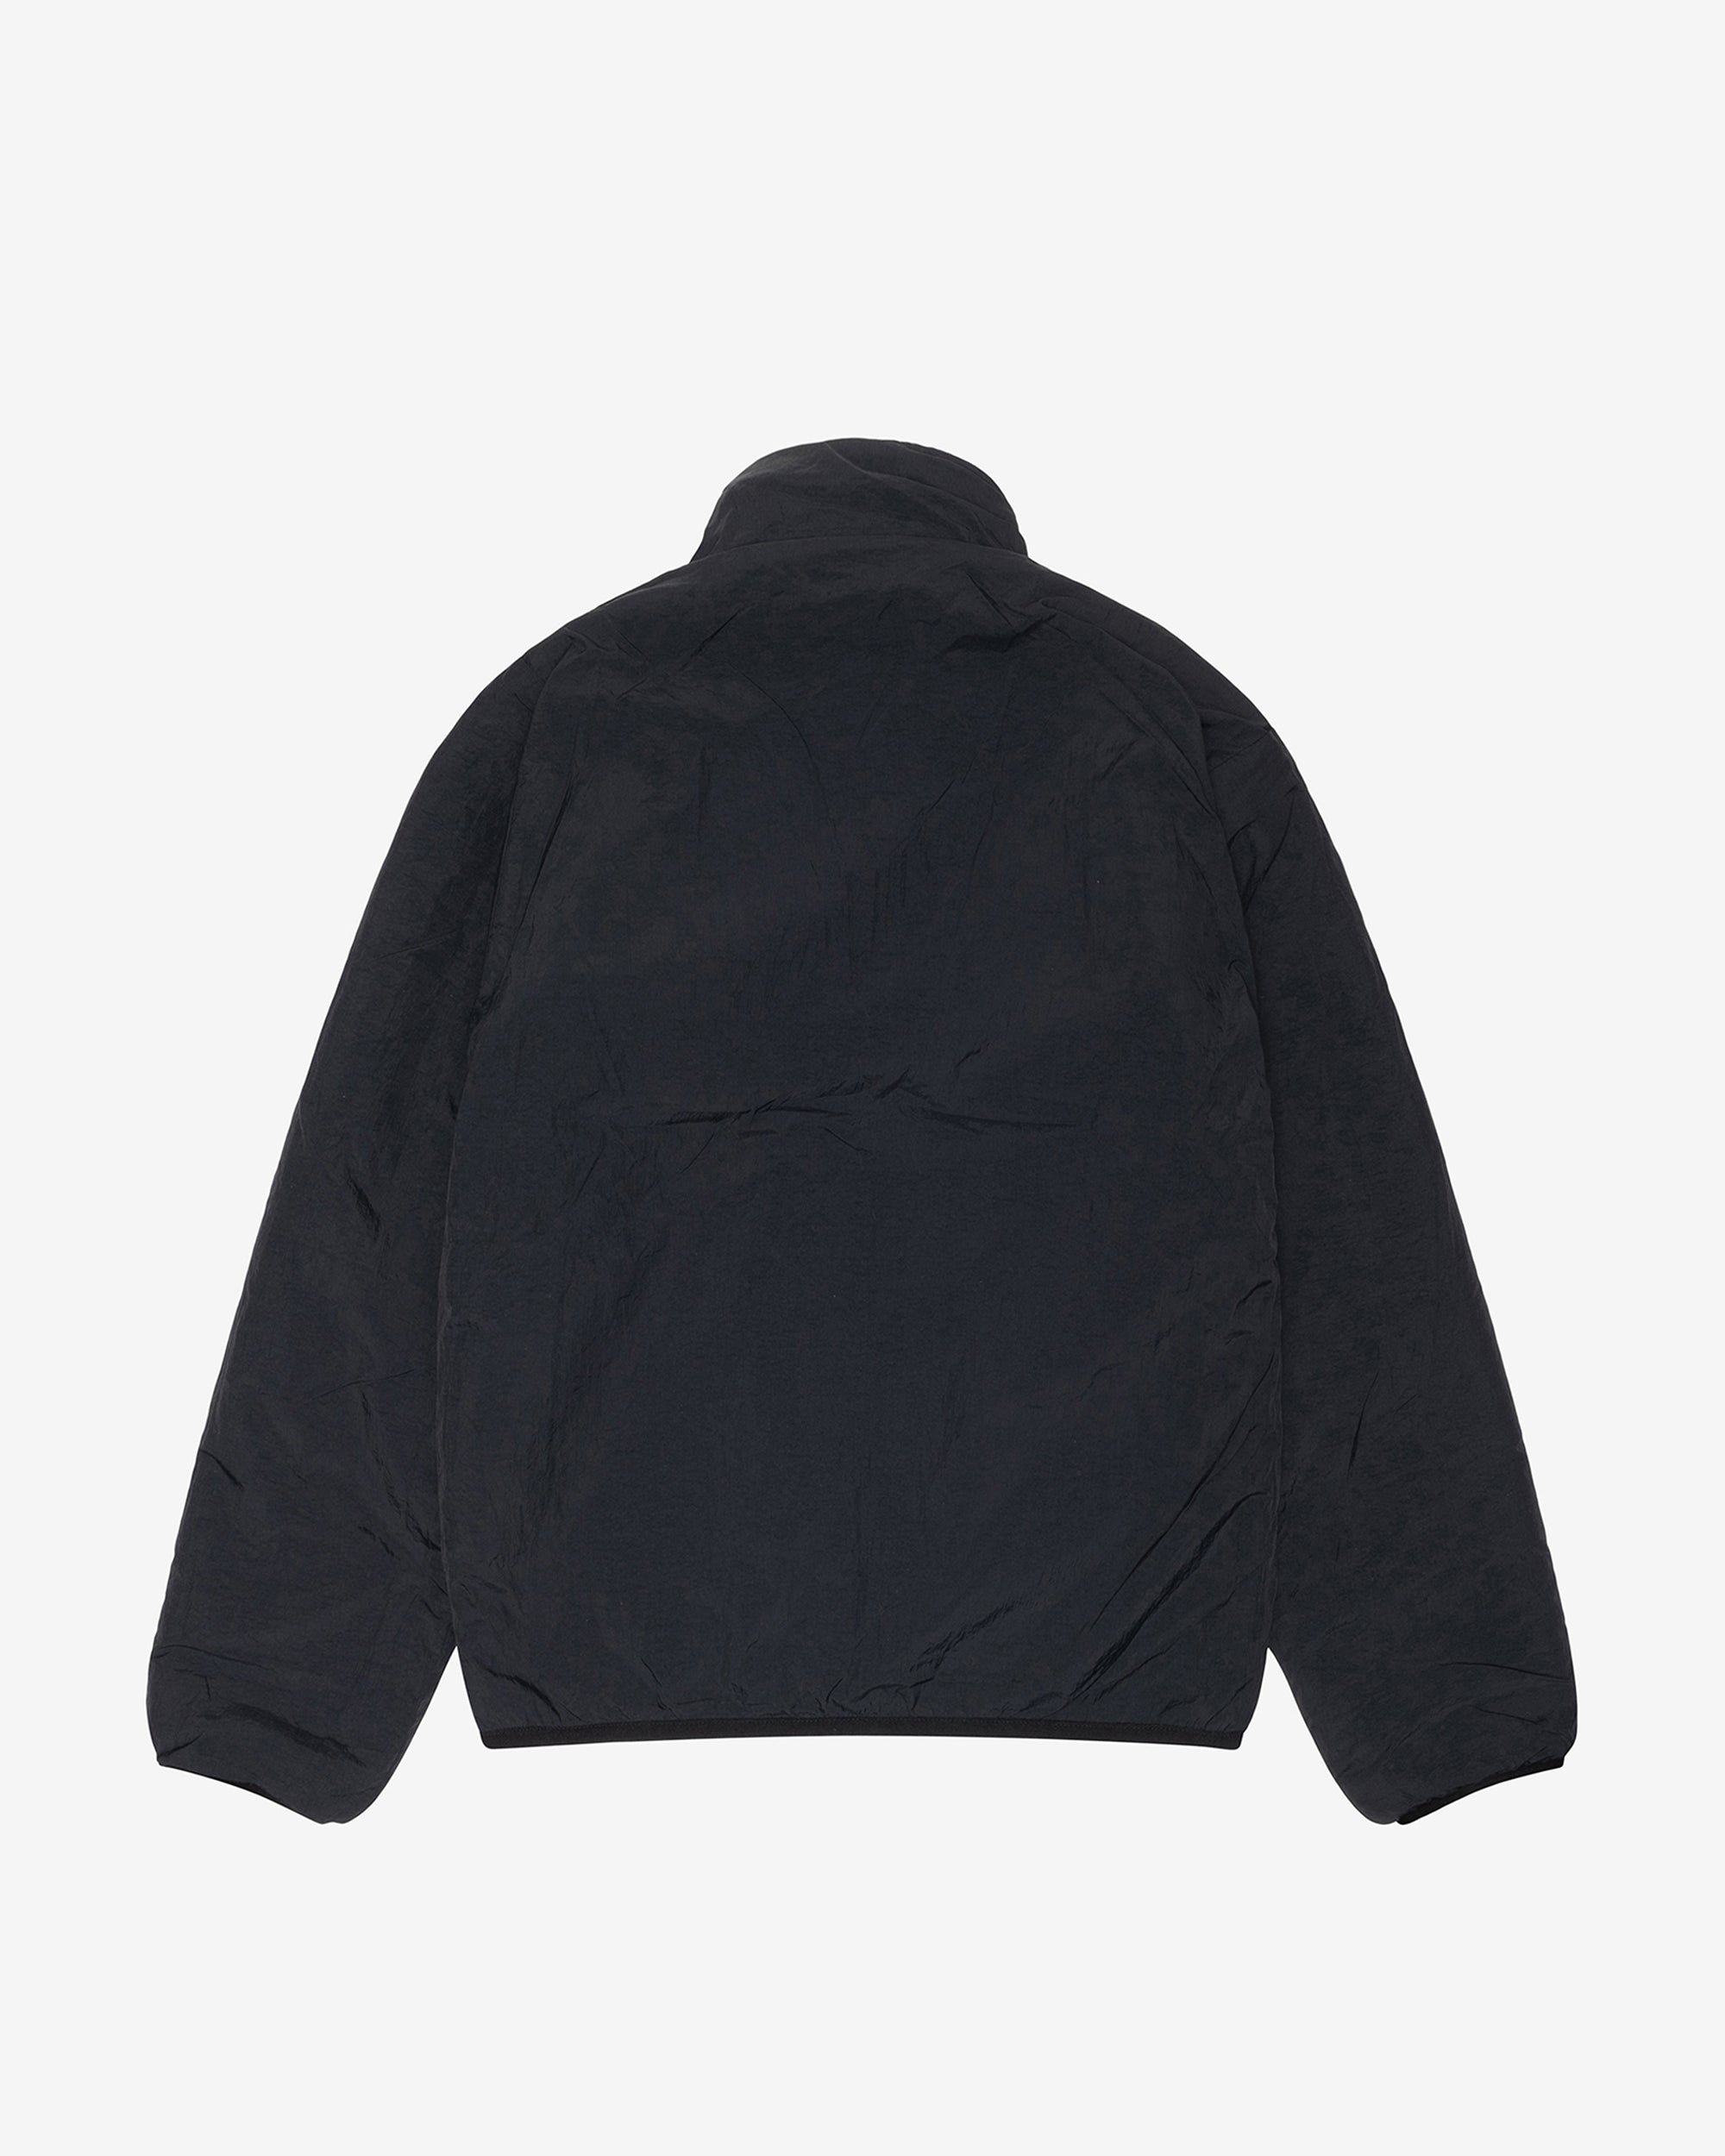 Stüssy - Sherpa Reversible Jacket - (Black) view 4